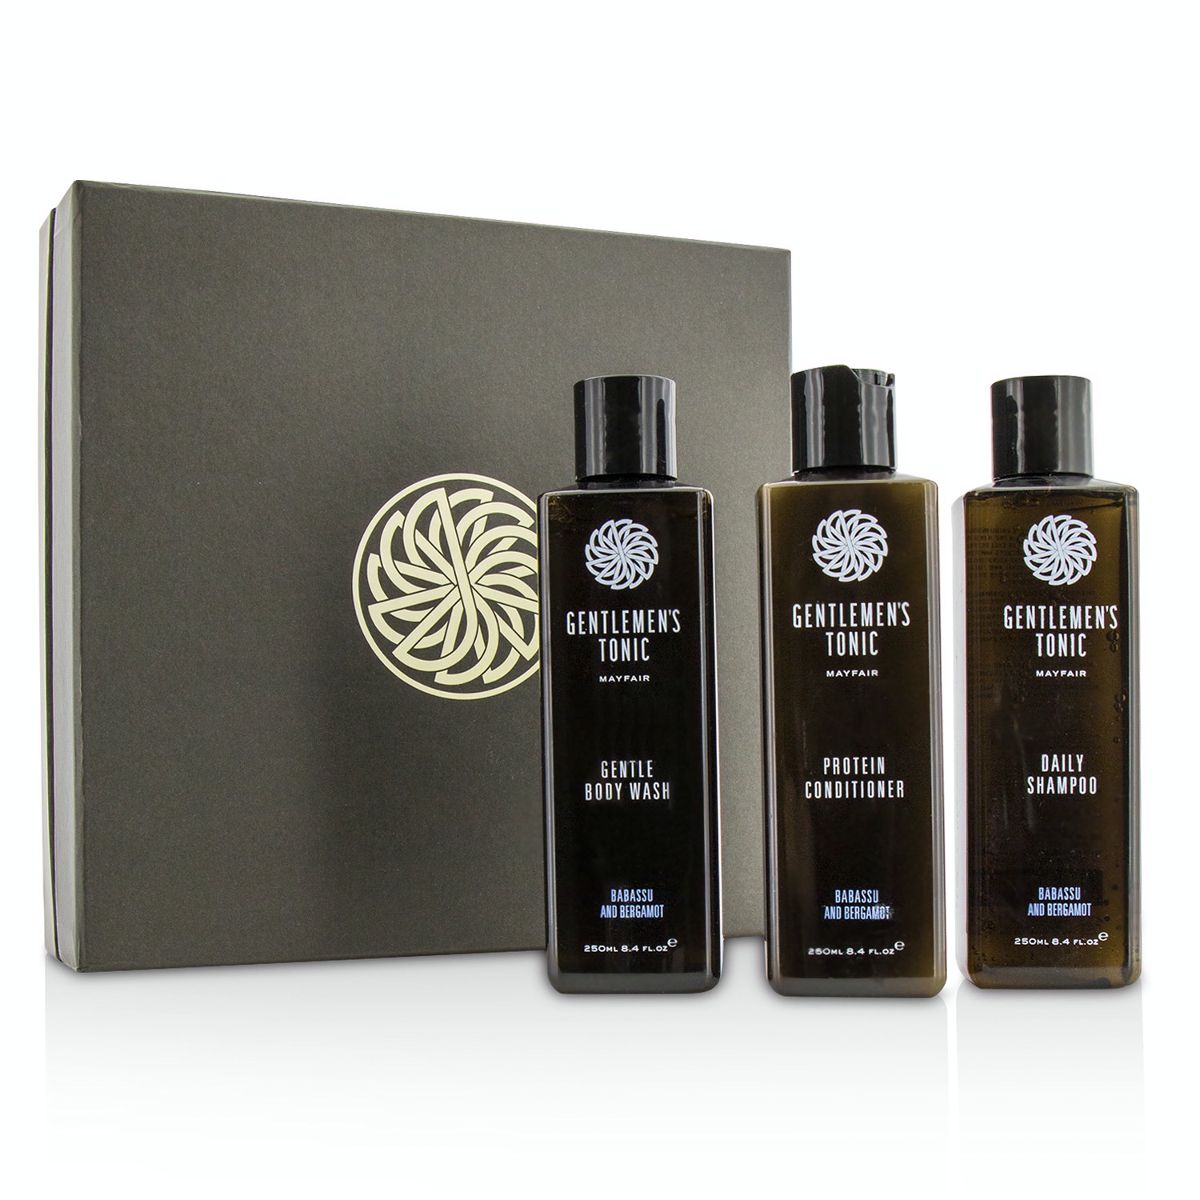 Shower Gift Set: Gentle Body Wash 250ml + Daily Shampoo 250ml + Protein Conditioner 250ml Gentlemens Tonic Image